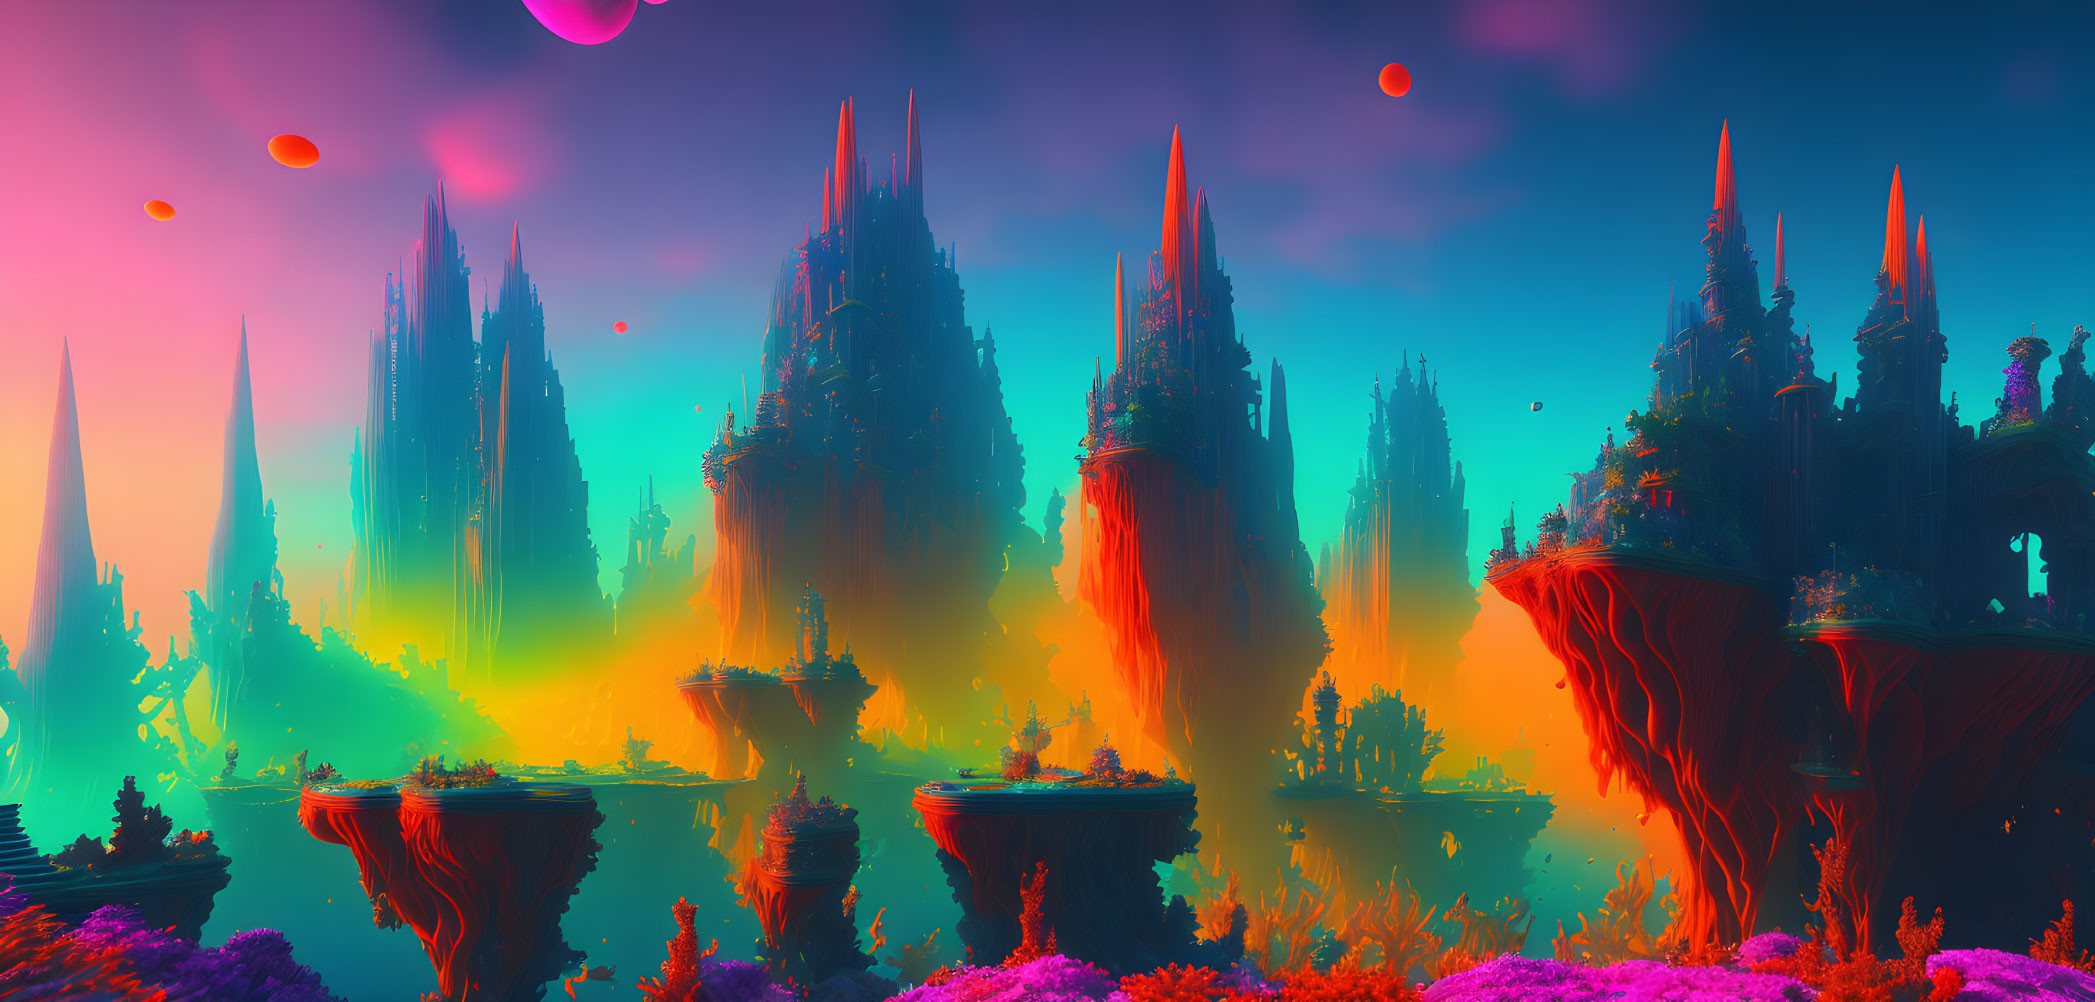 Colorful Alien Landscape: Floating Islands, Towering Spires, Multiple Moons